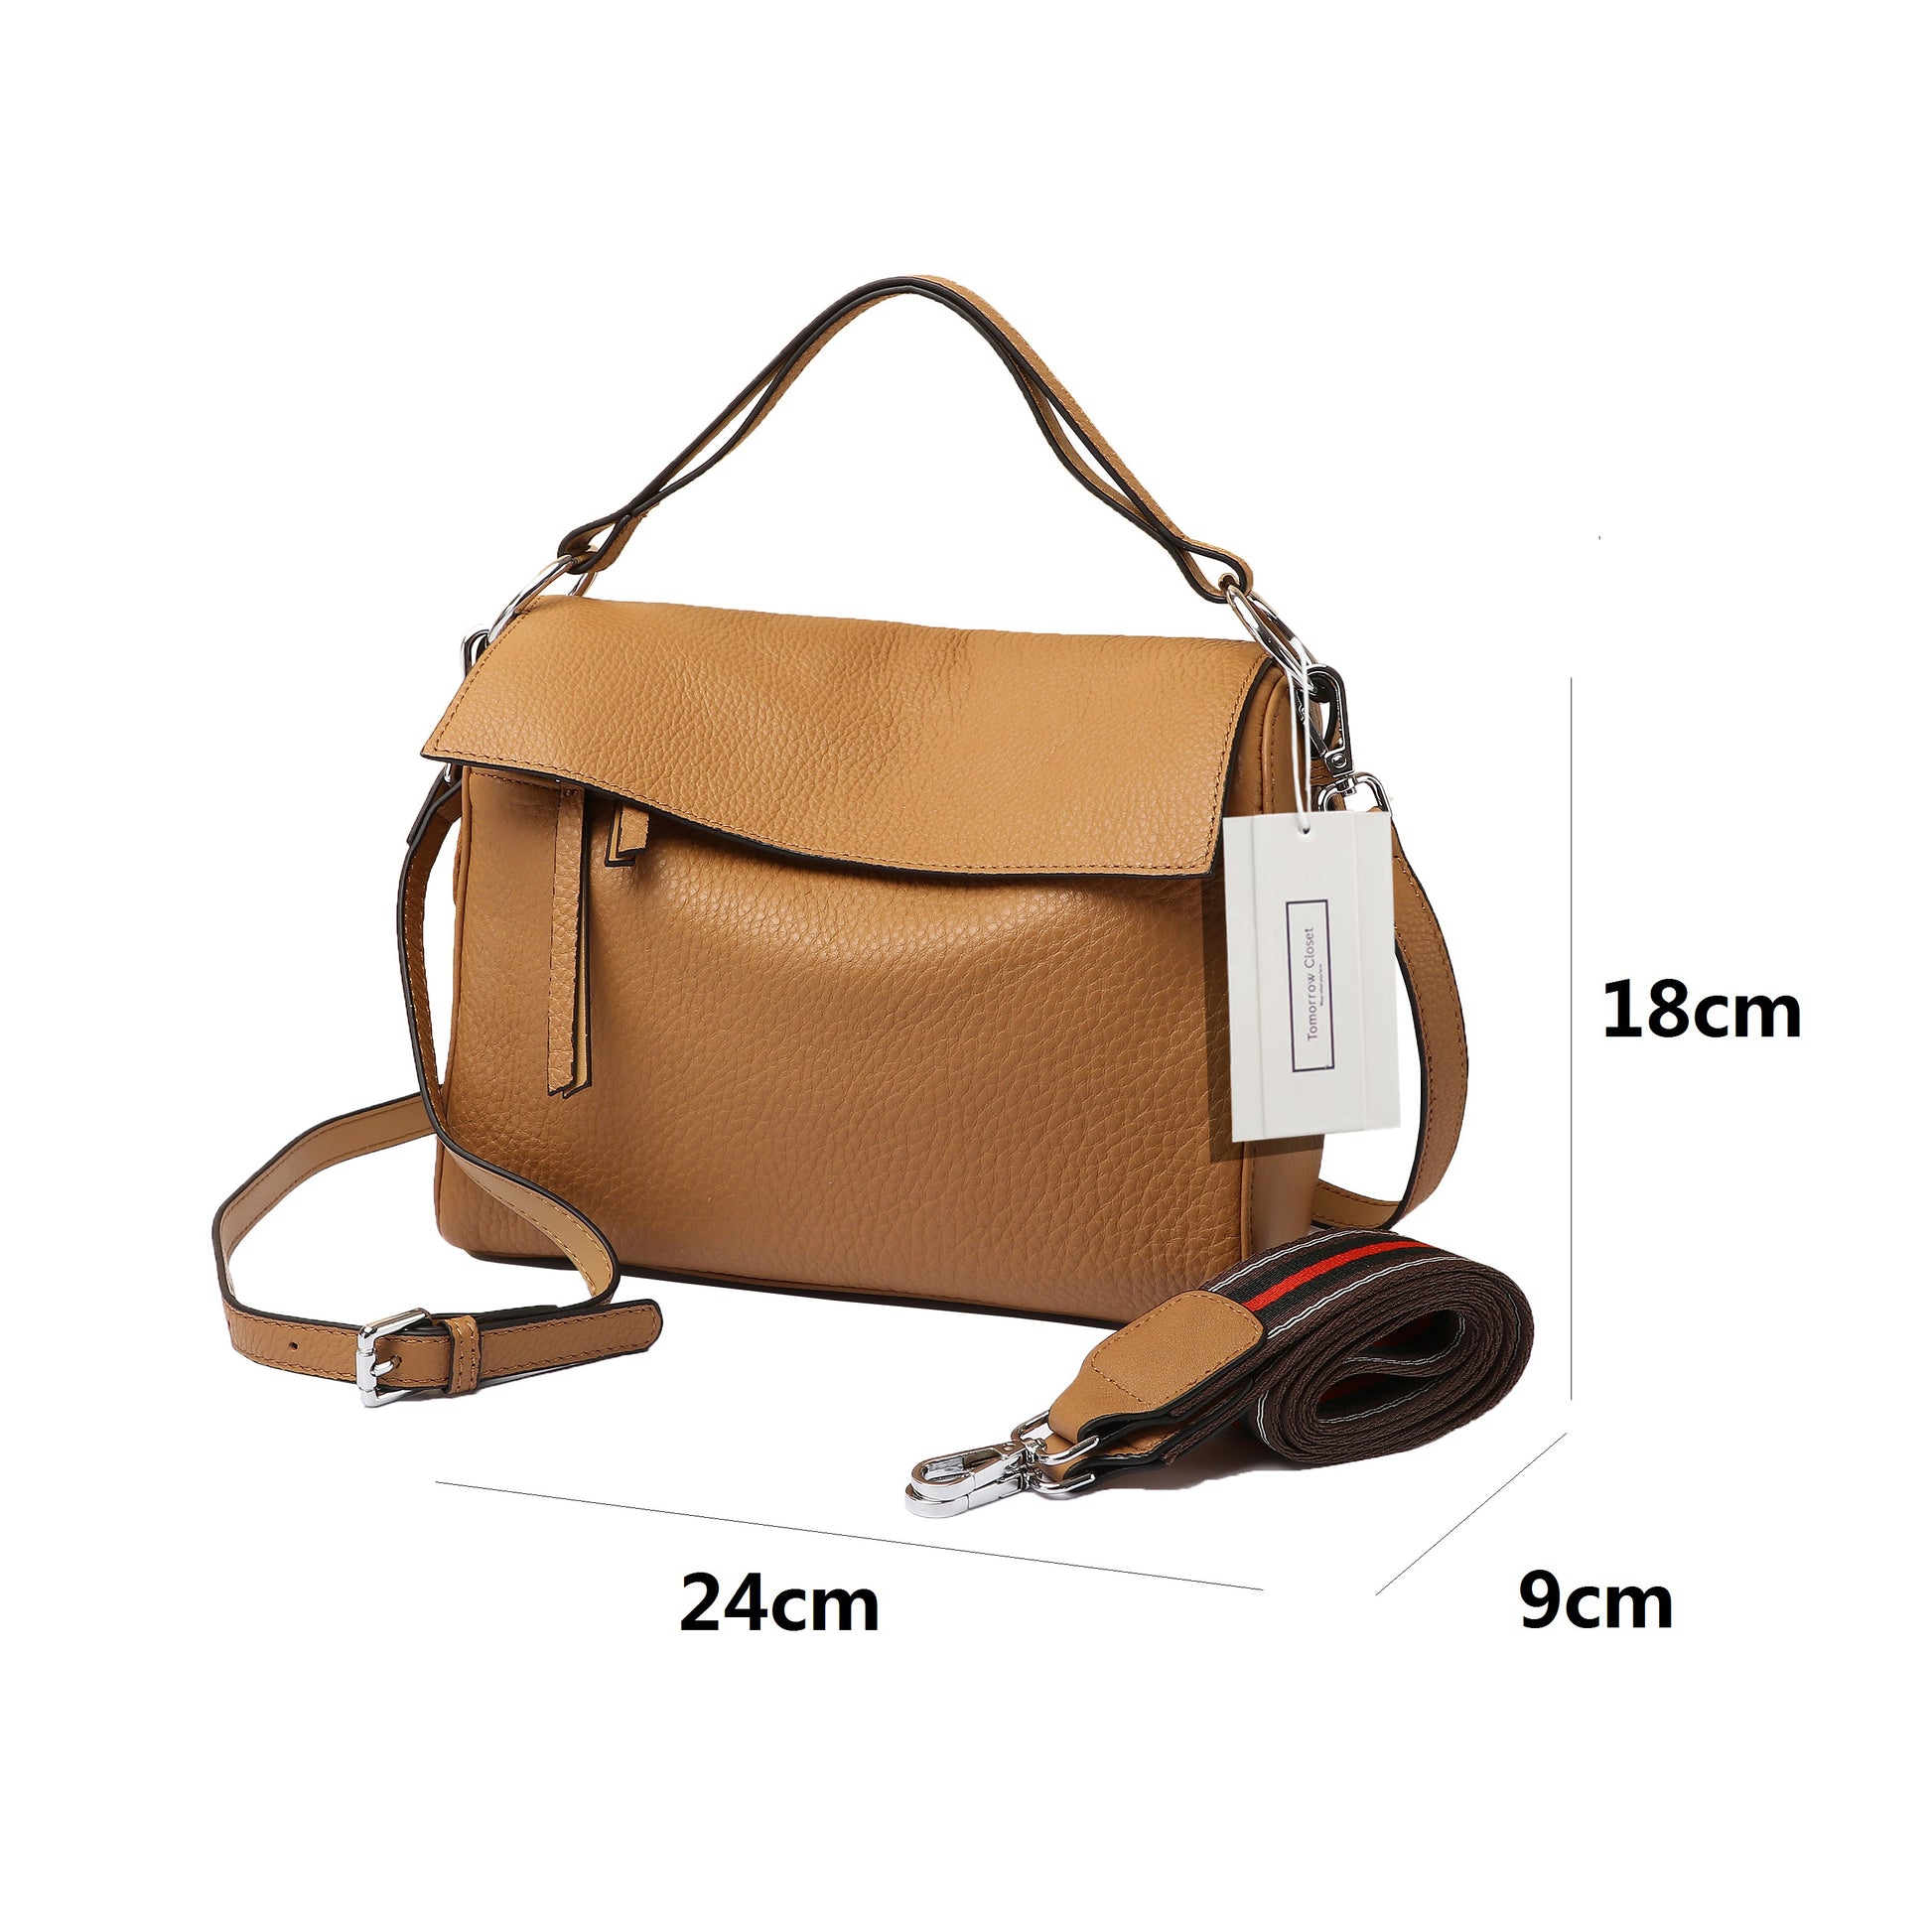 Women's genuine cowhide leather handbag Trika V2 design with 2 straps by Tomorrow Closet